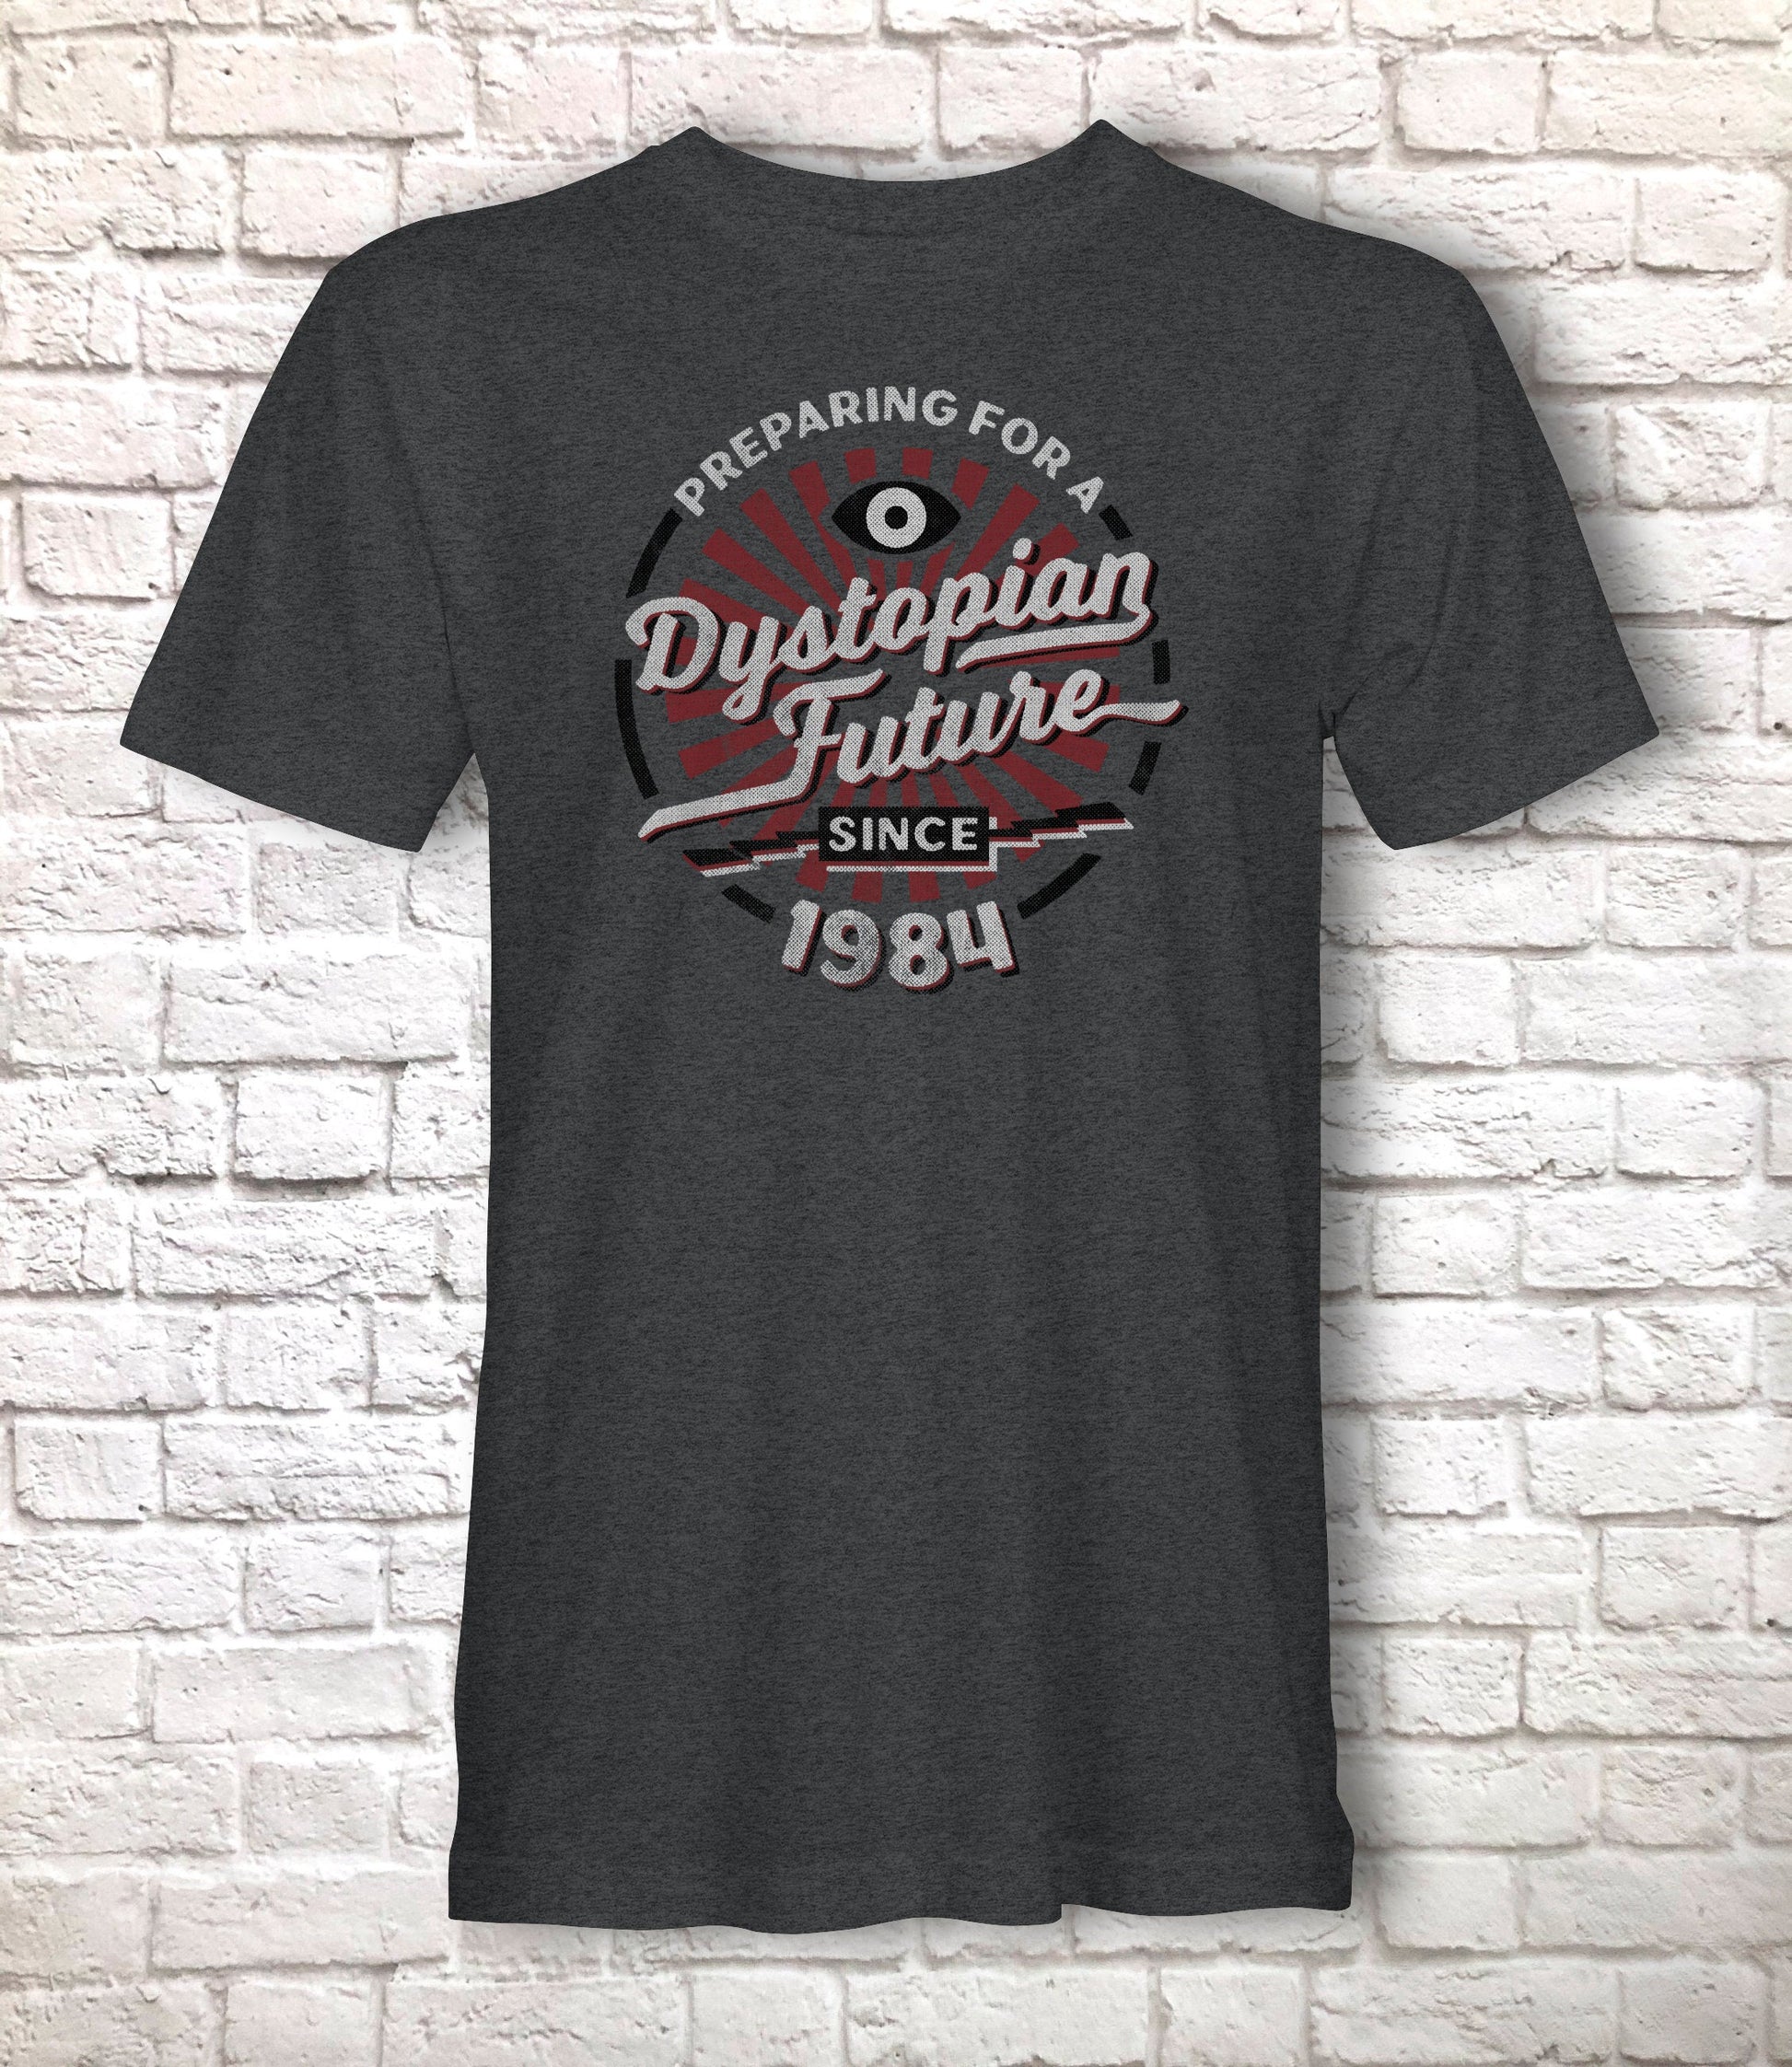 Dystopian Future 1984 Shirt, Funny Orwell Gift Idea, Humorous 2020 Orwellian Lockdown T-Shirt